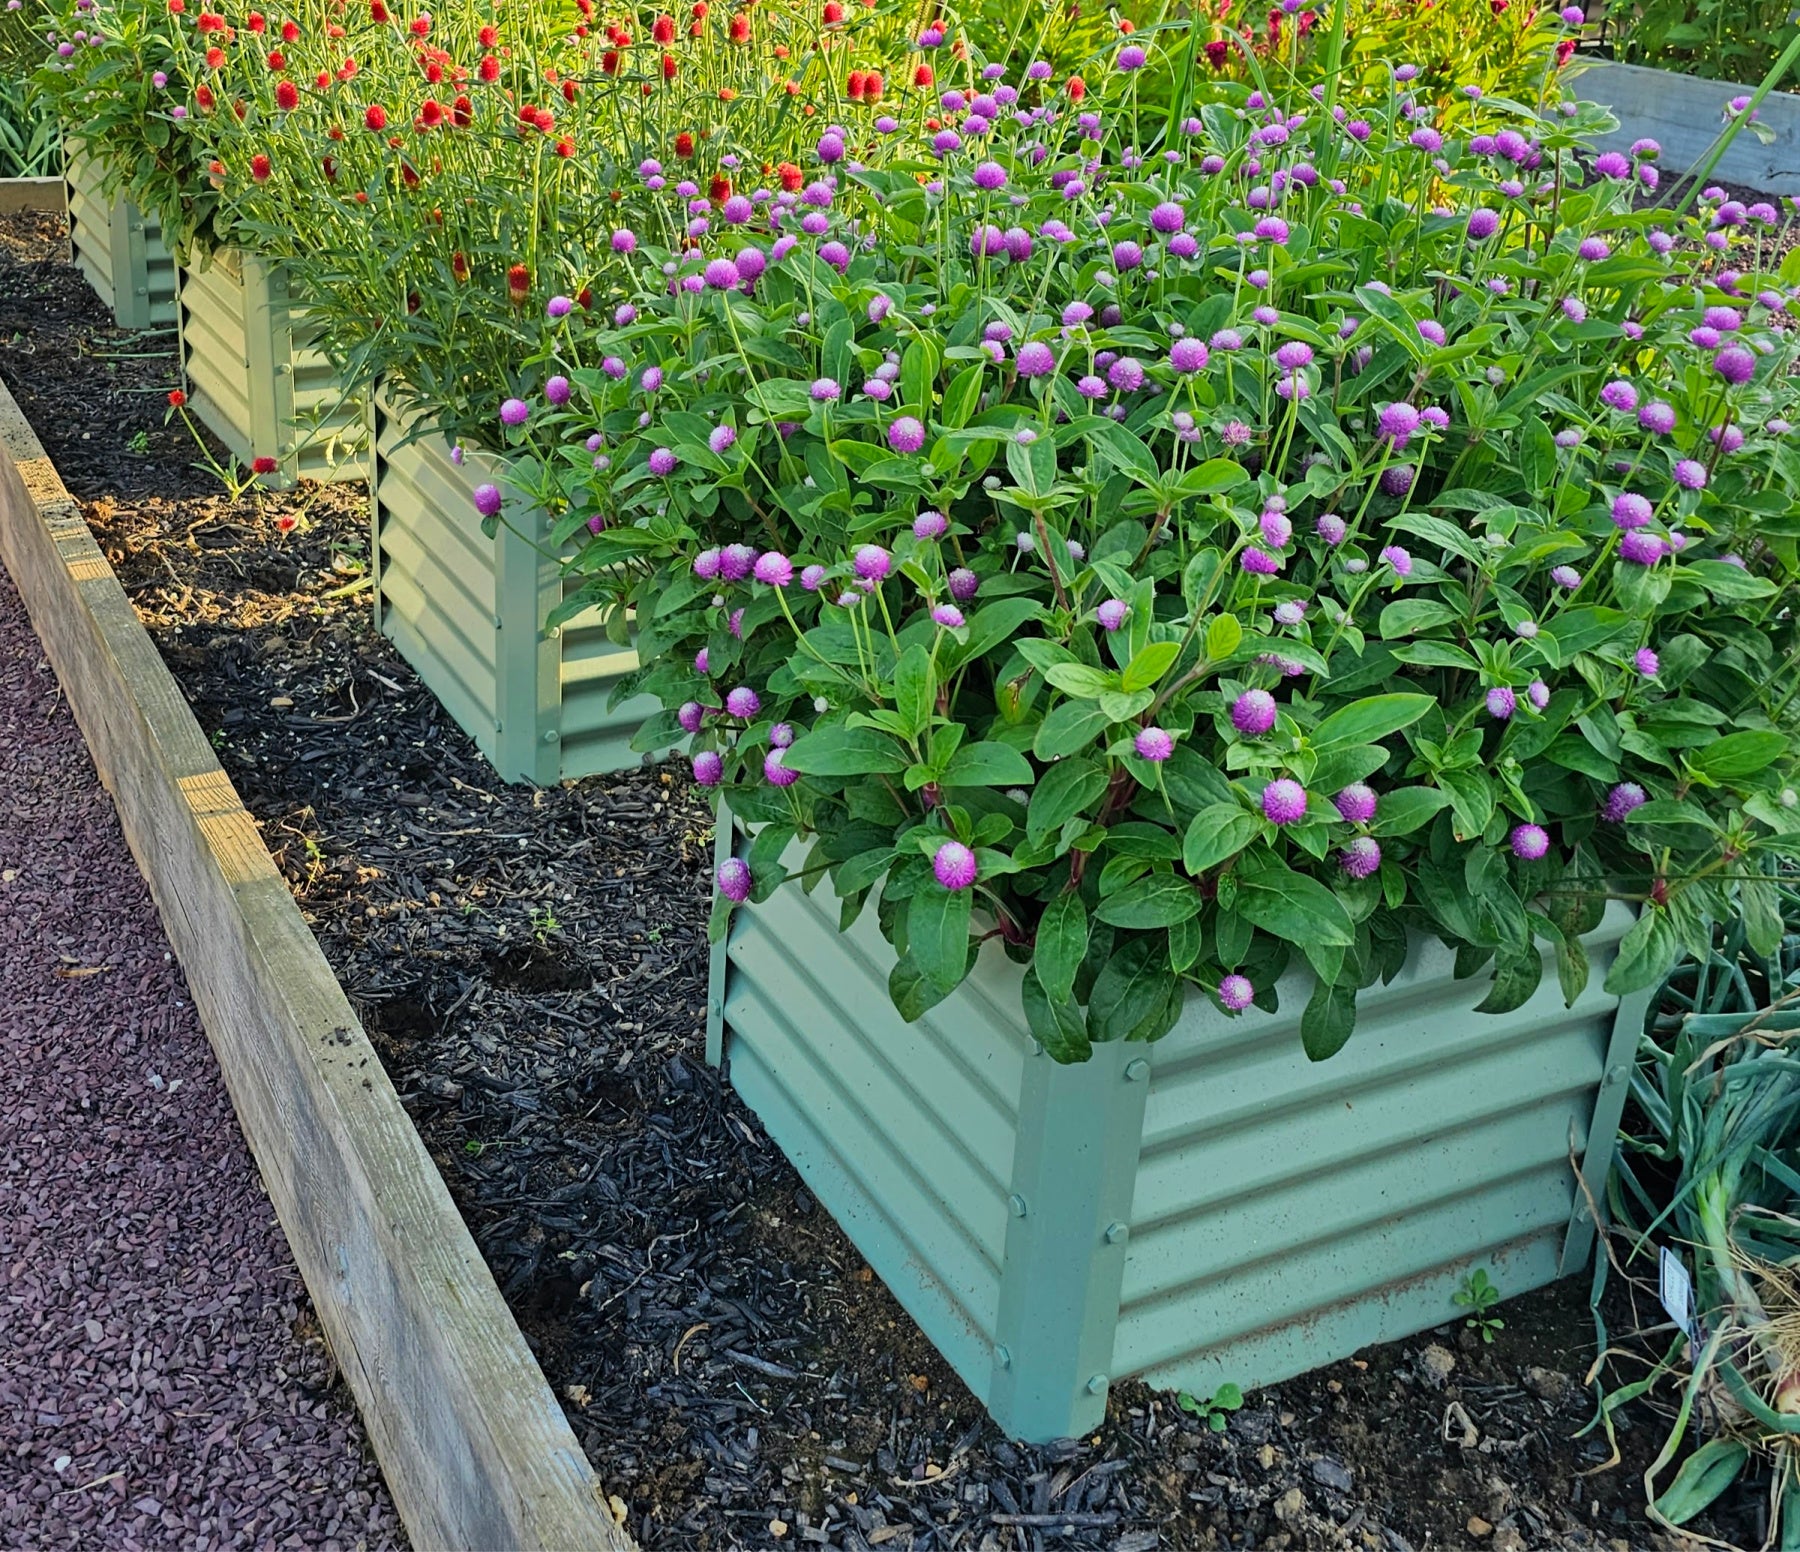 sage cubo garden beds with glob amaranths